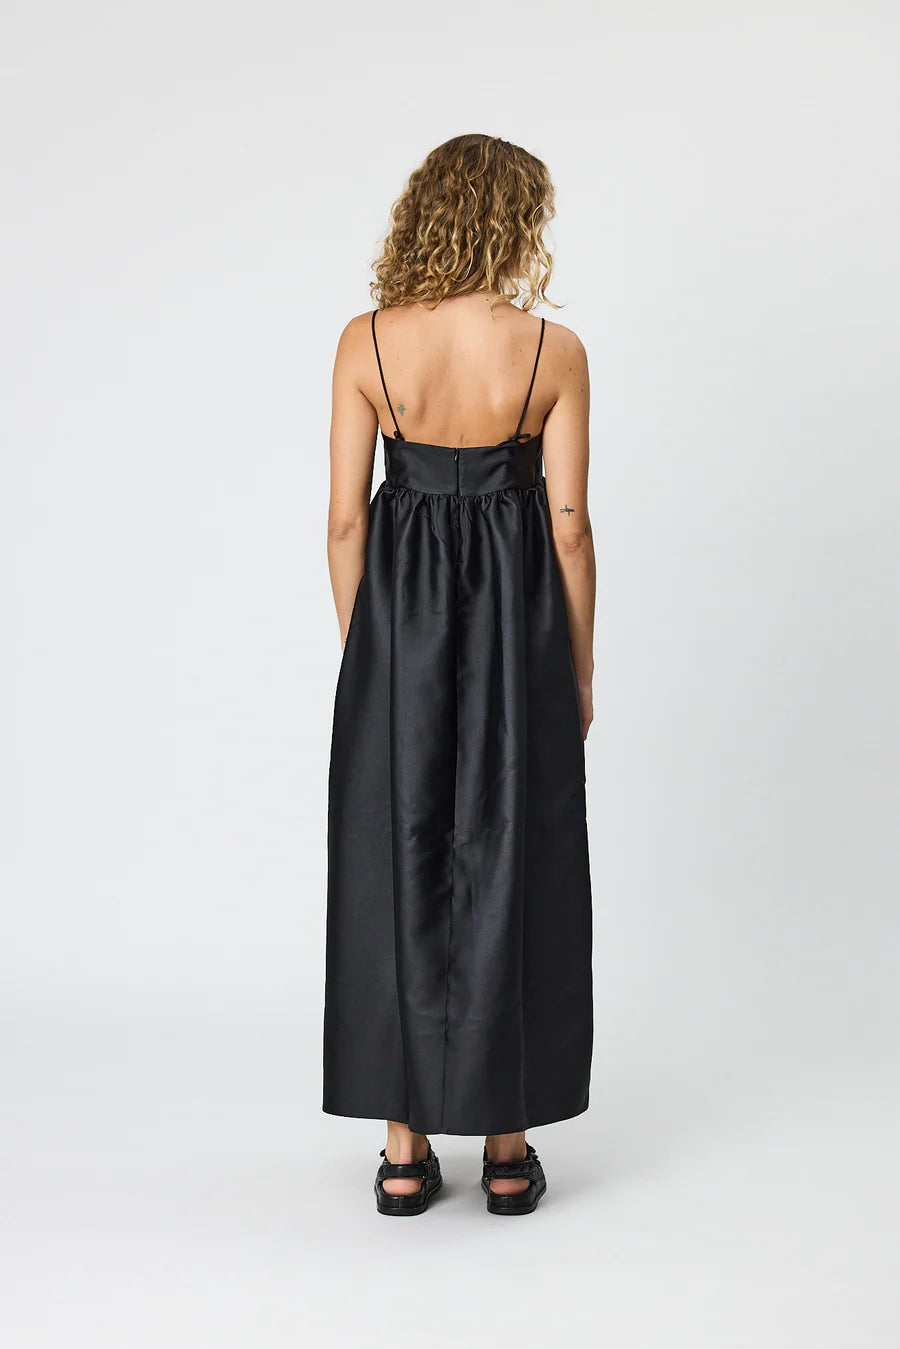 SYDNEY DRESS - BLACK